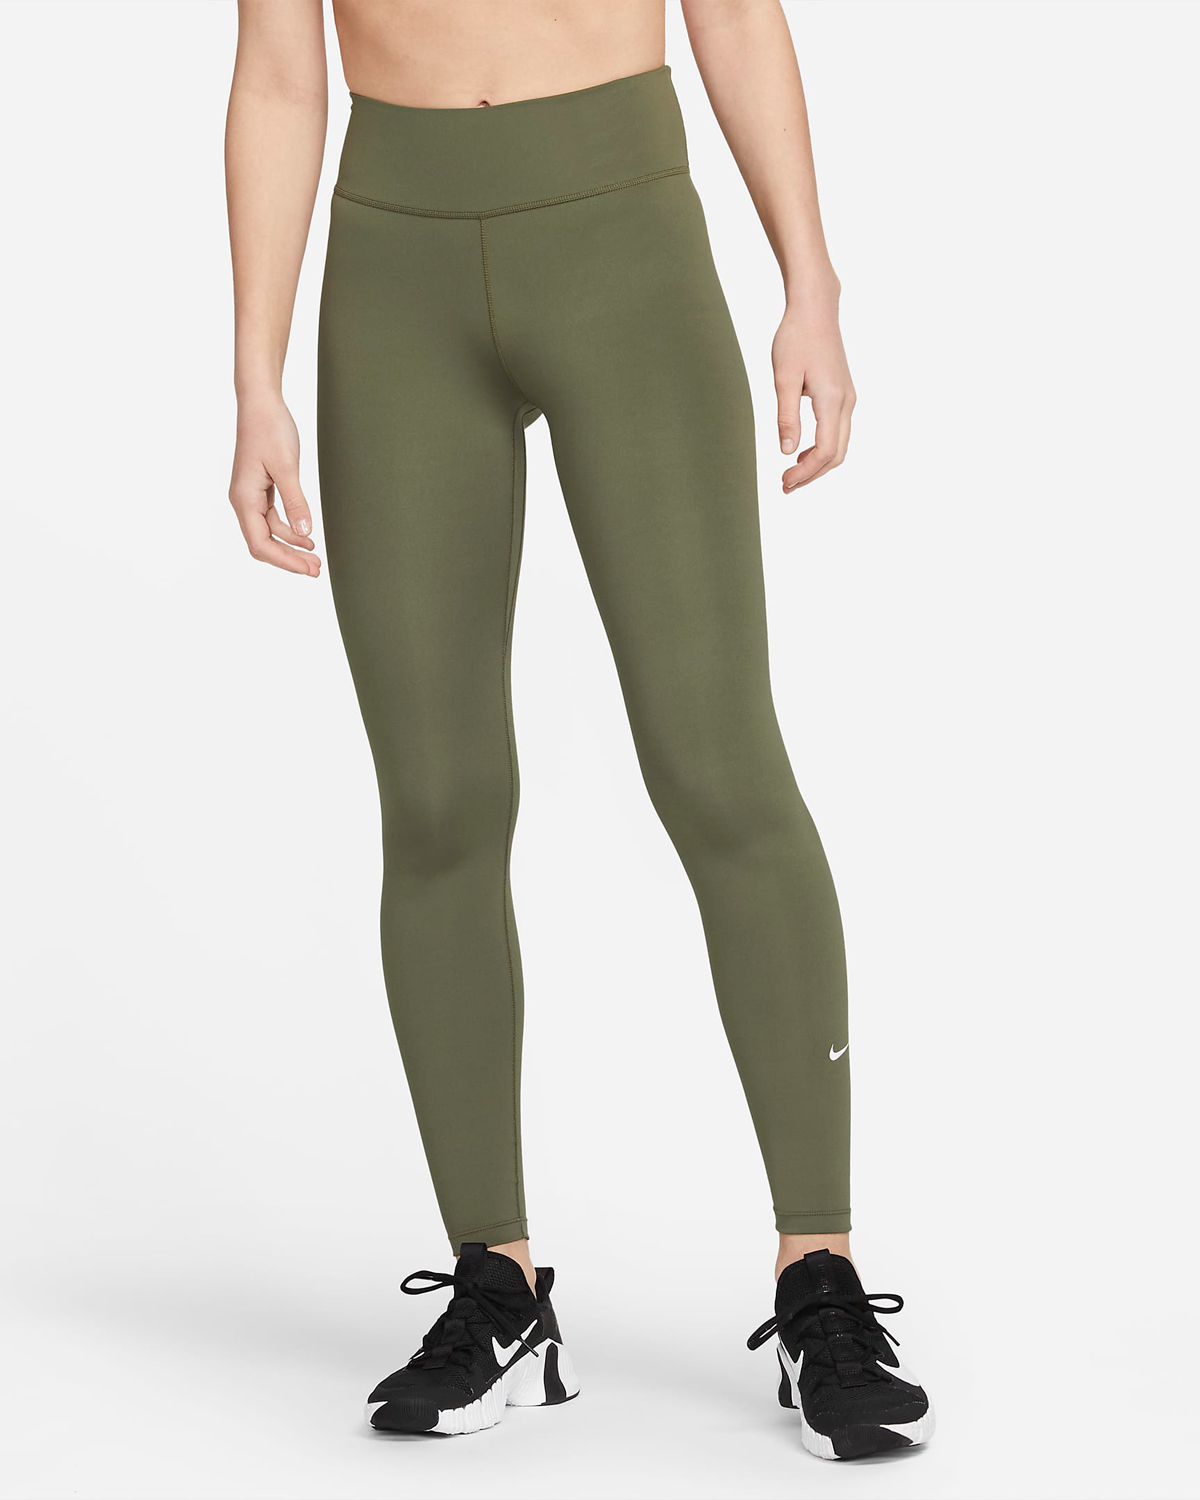 Nike-Womens-Leggings-Medium-Olive